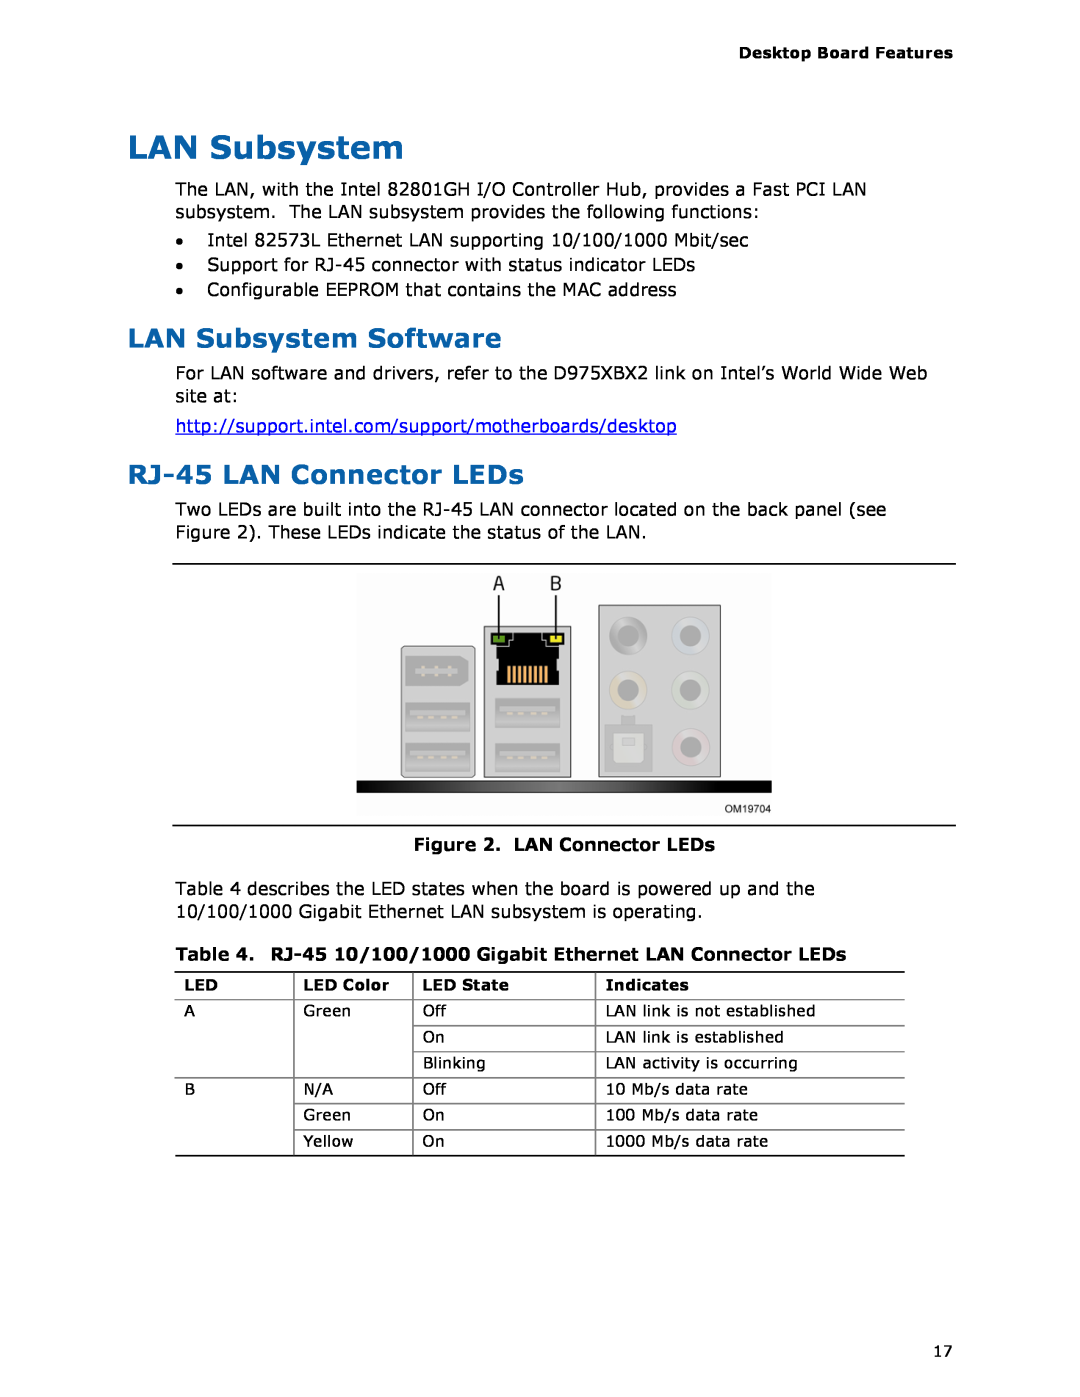 Intel D975XBX2 manual LAN Subsystem Software, RJ-45LAN Connector LEDs 